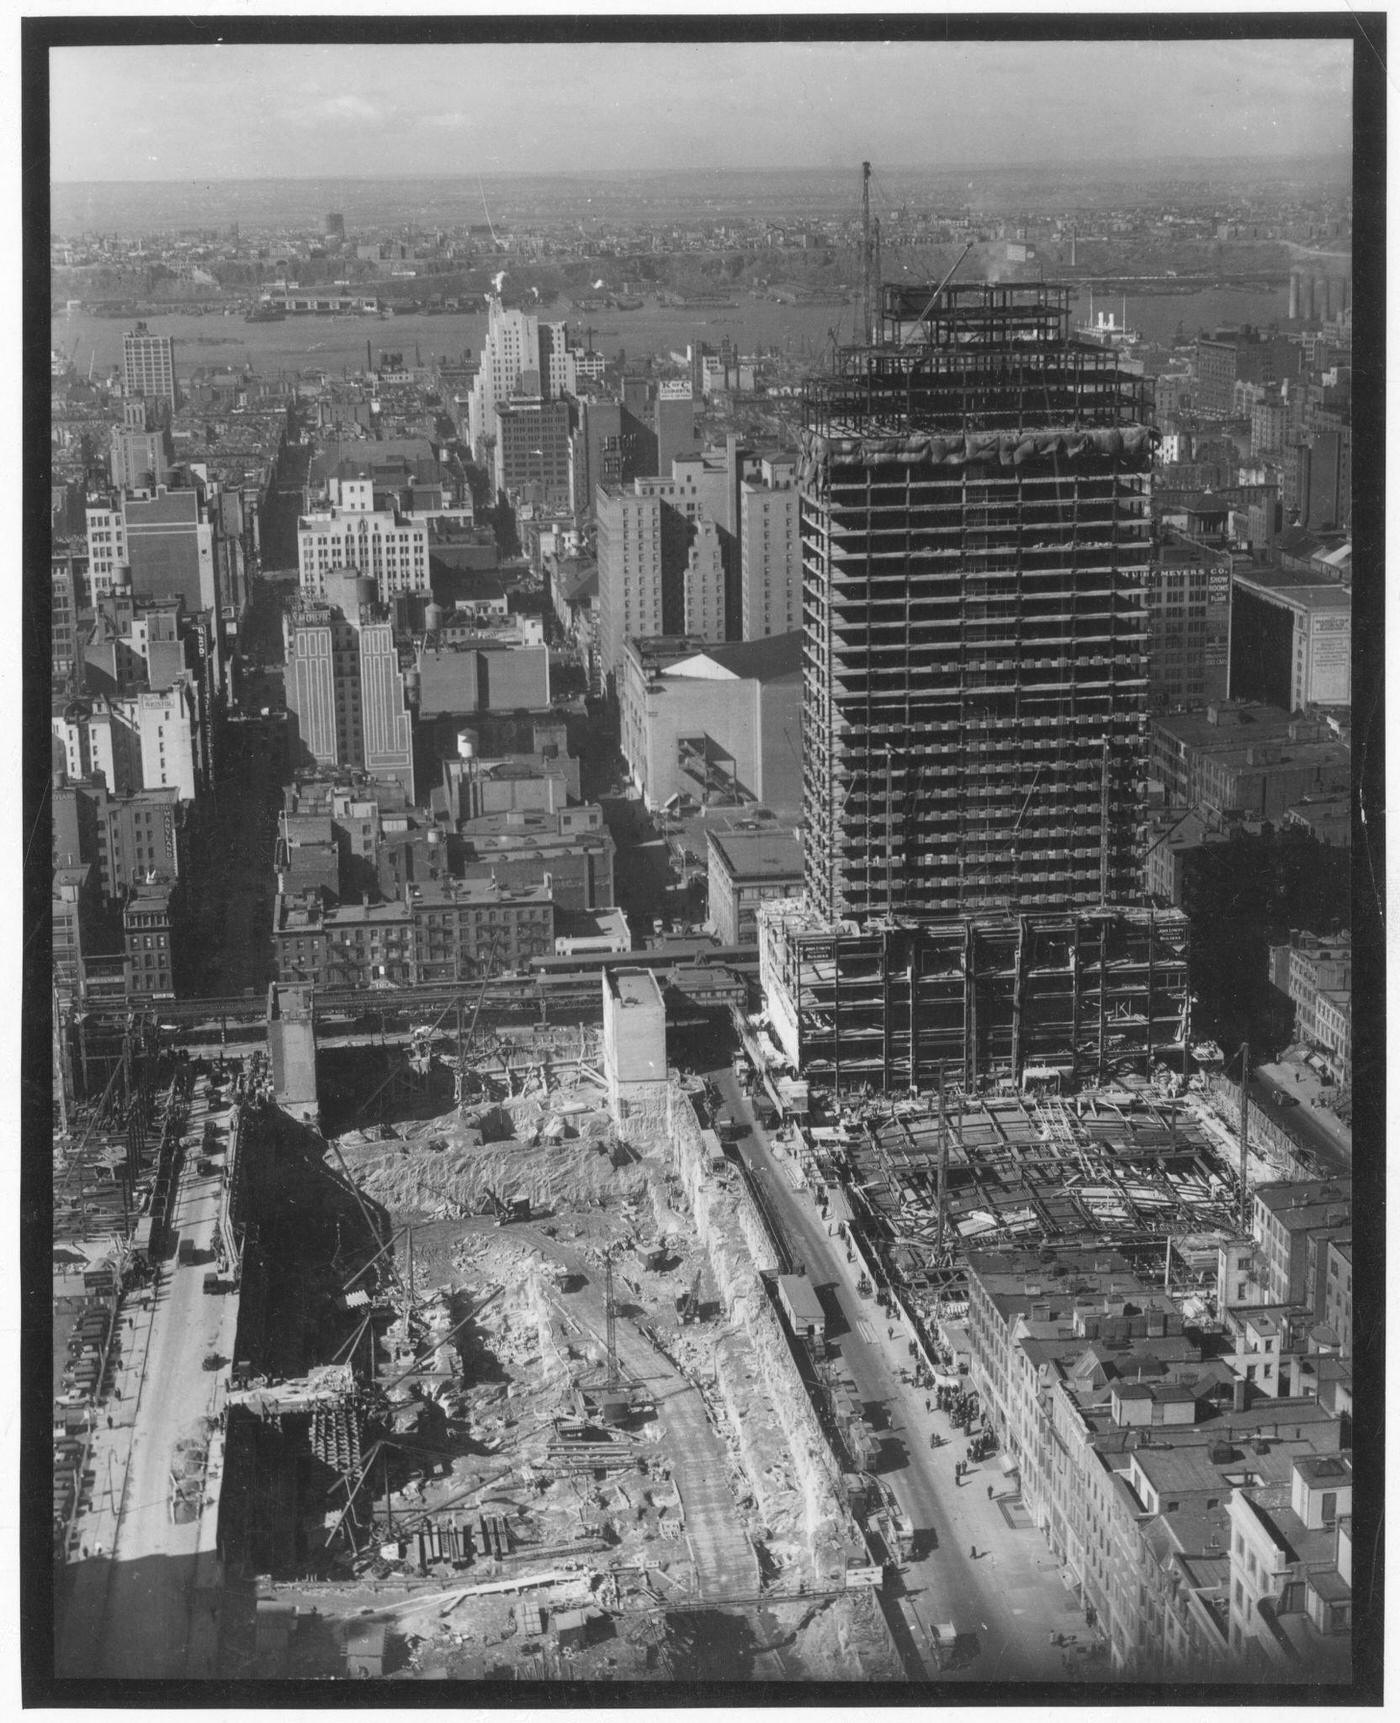 Rockefeller Center Construction Site, Birdseye View, Manhattan, 1929.